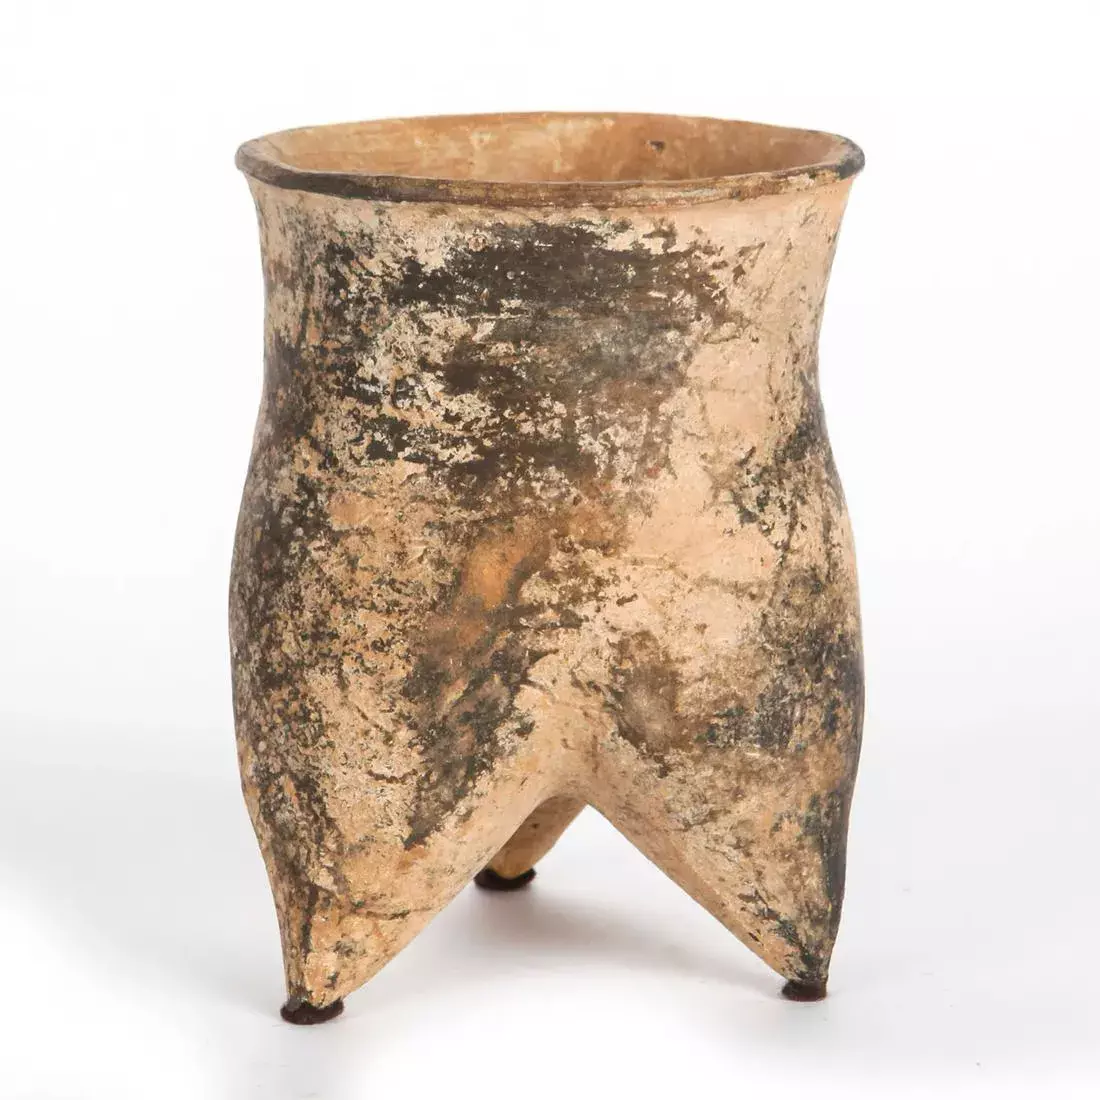 Sell ancient China Pottery